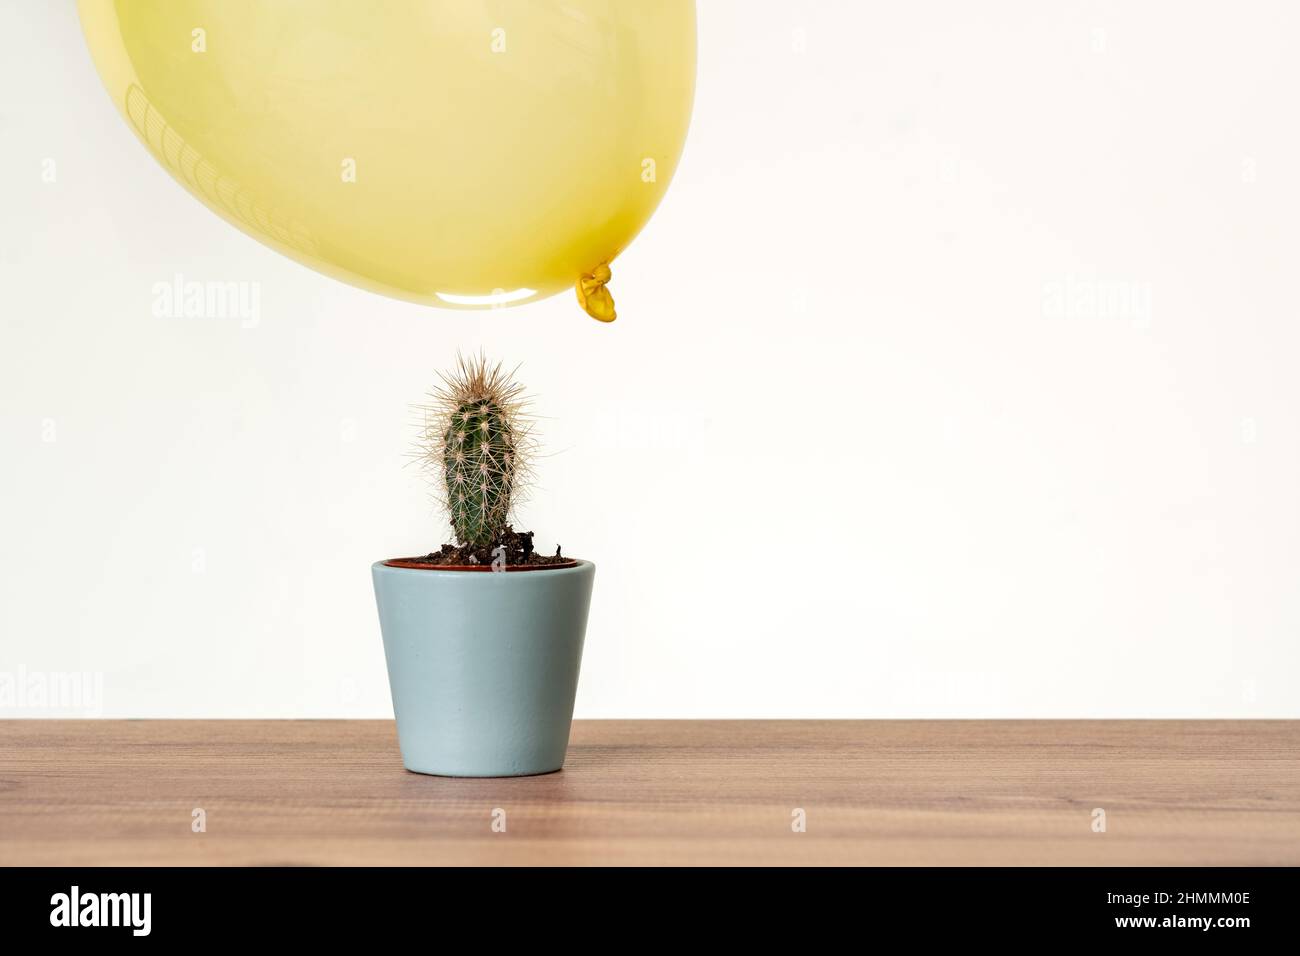 Balloons floatingon air close to cactus. Risk, danger zone, tense concept. Stock Photo